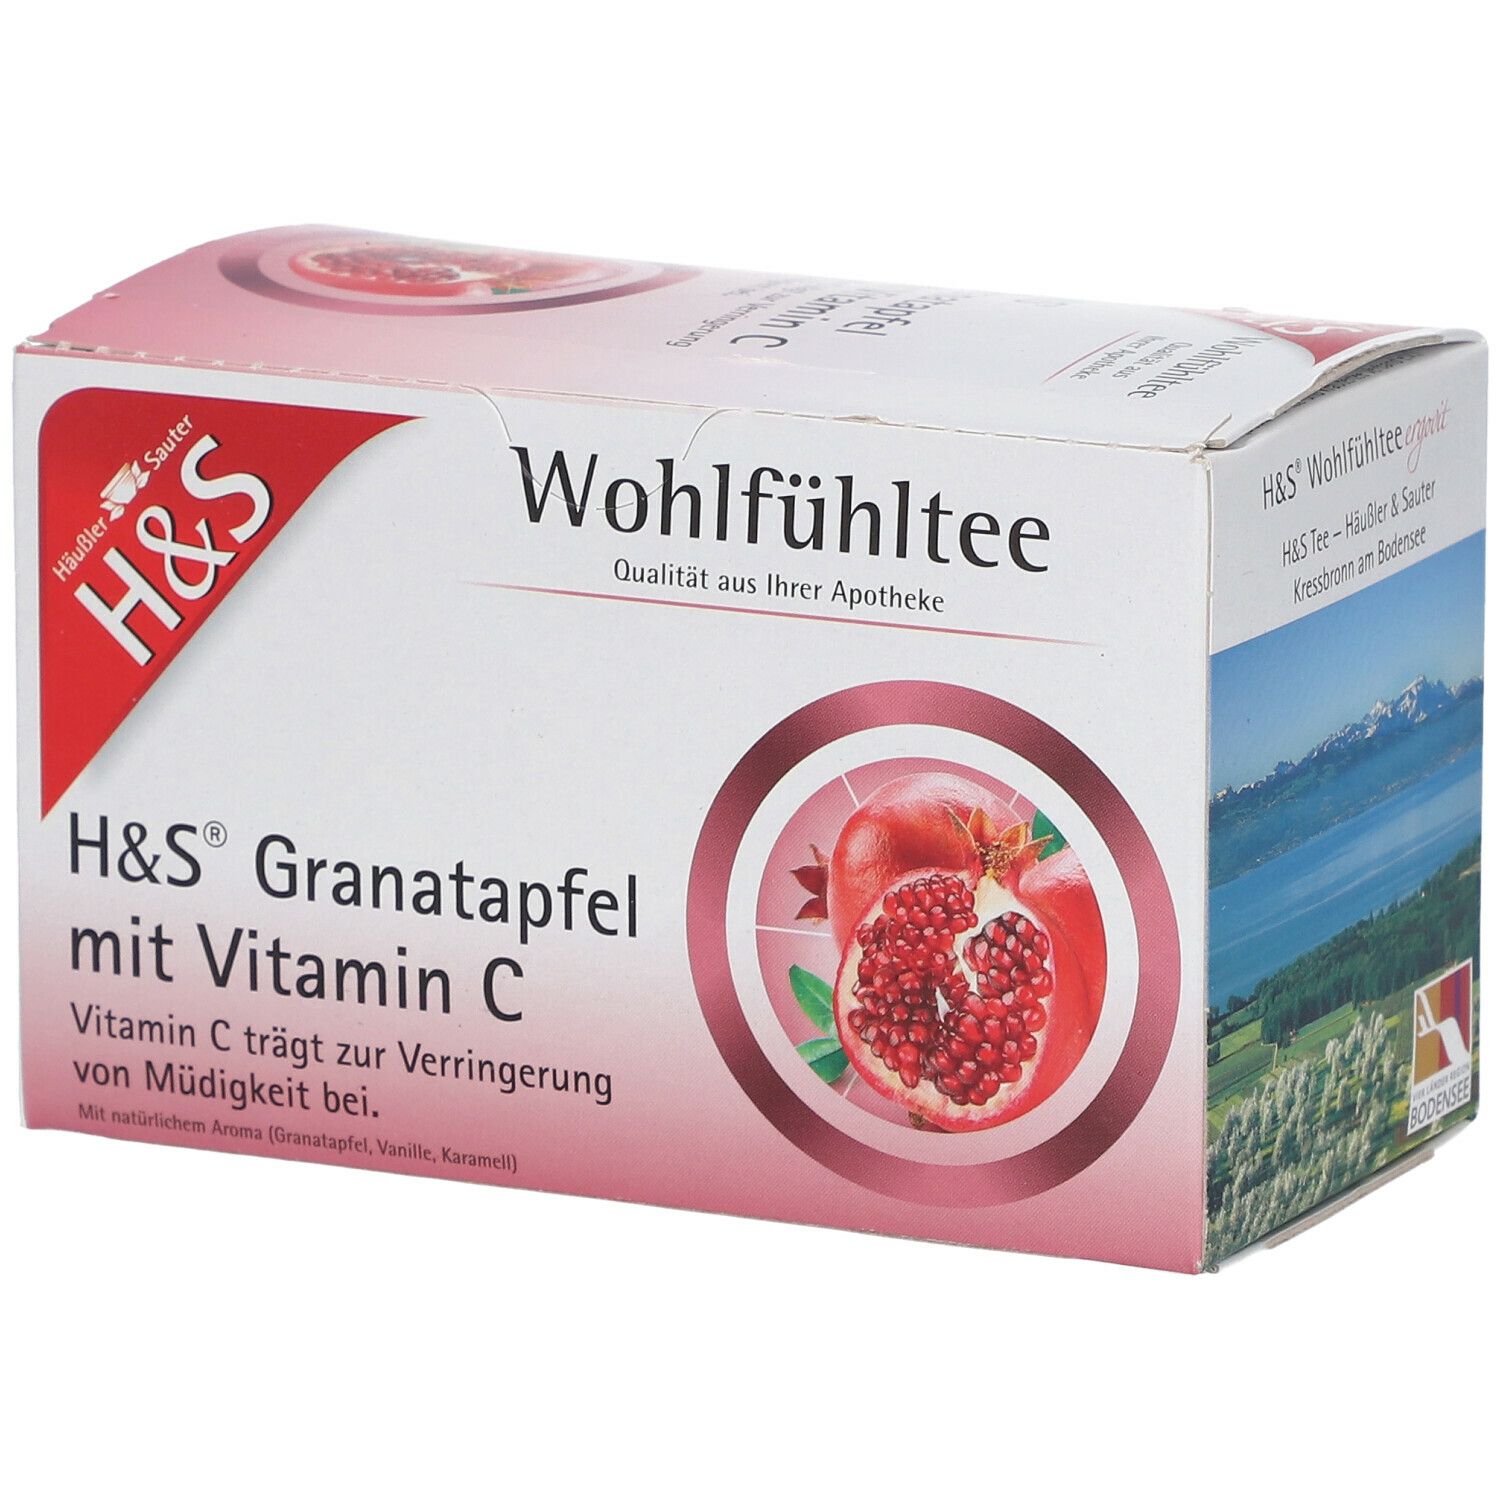 H&S Granatapfel mit Vitamin C